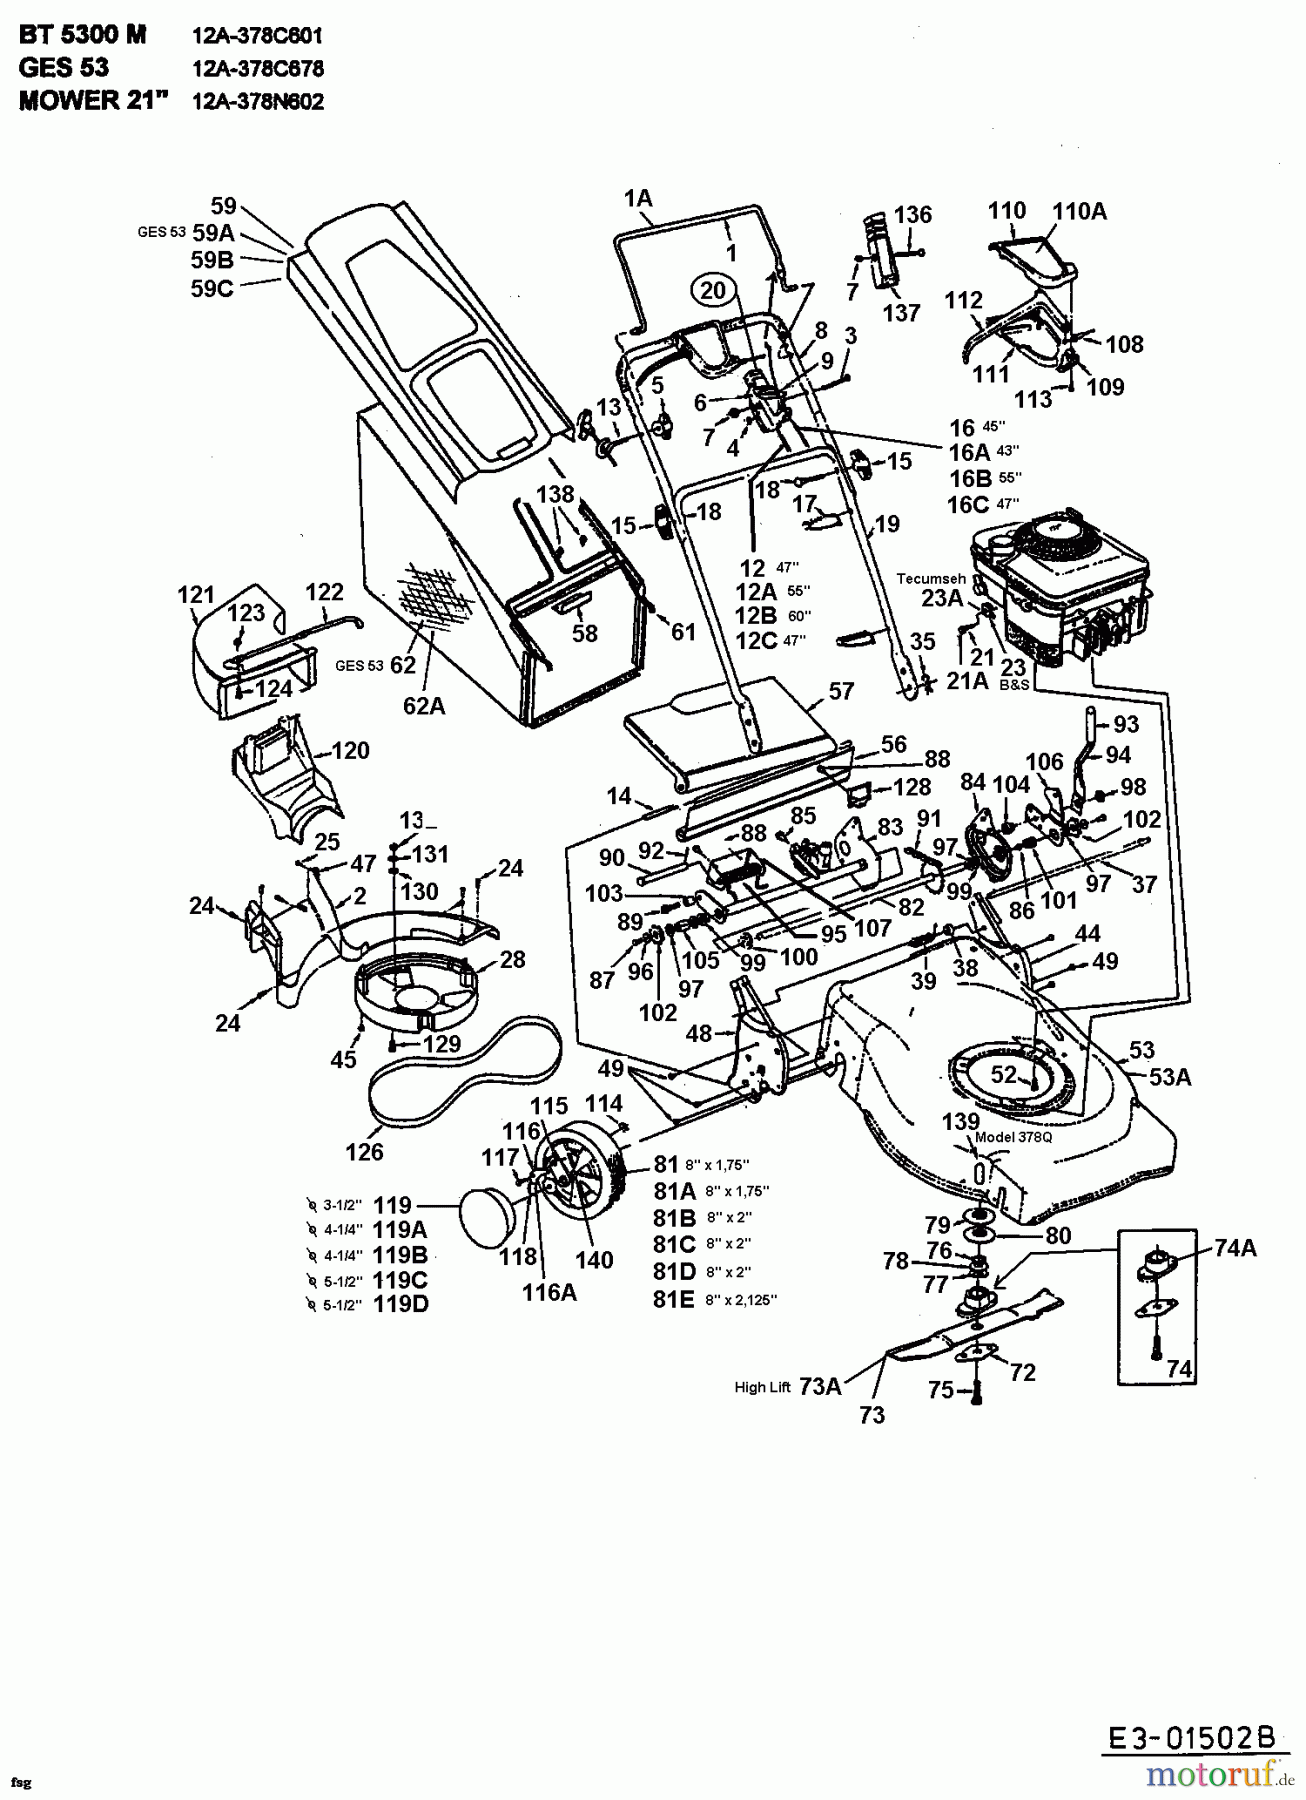  MTD Motormäher mit Antrieb GES 53 E 12AE378O678  (1999) Grundgerät